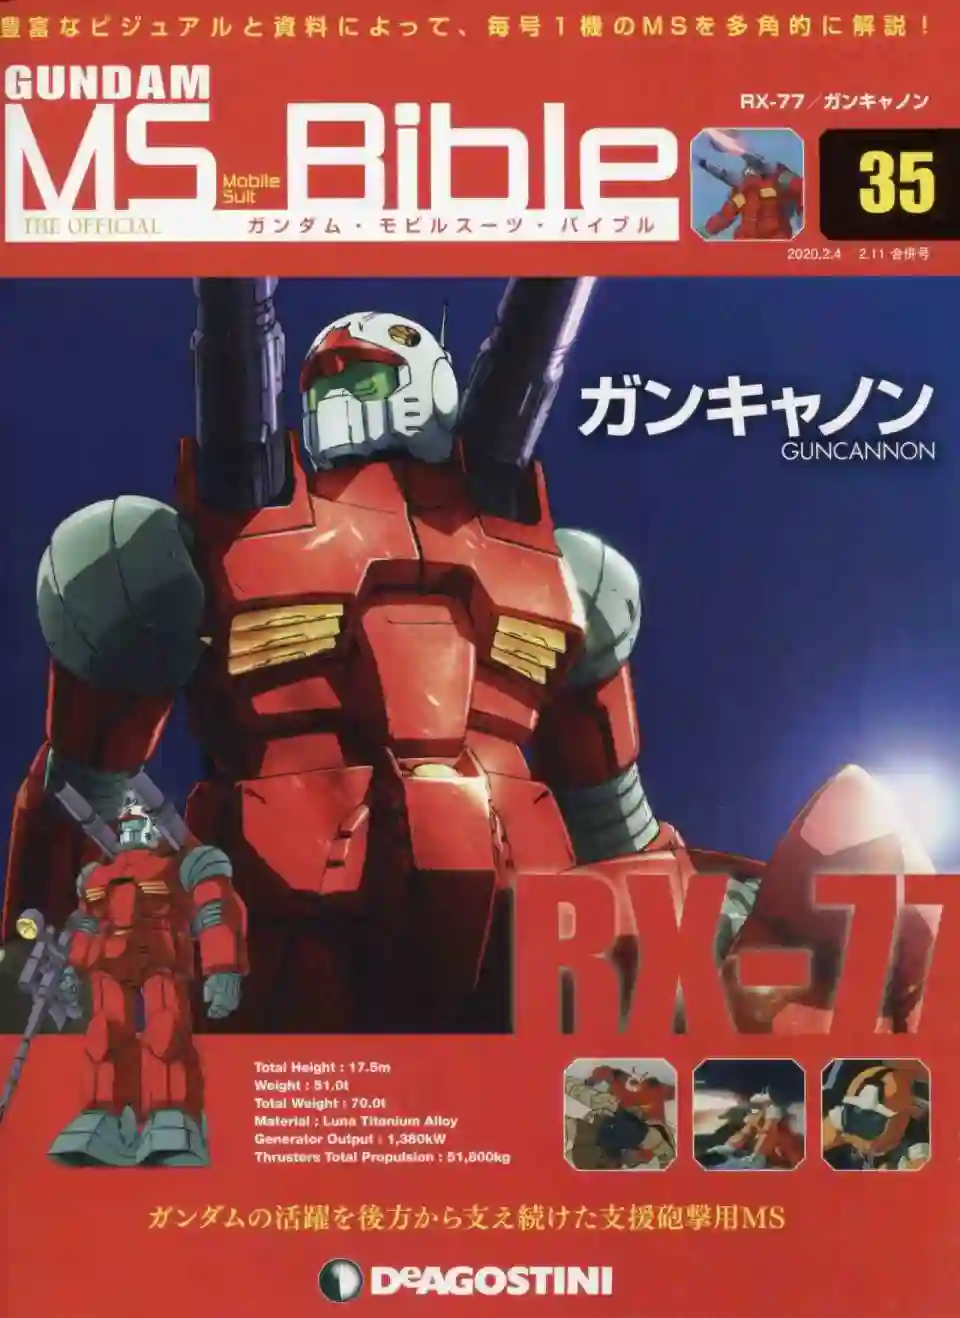 Gundam Mobile Suit Bible第35卷